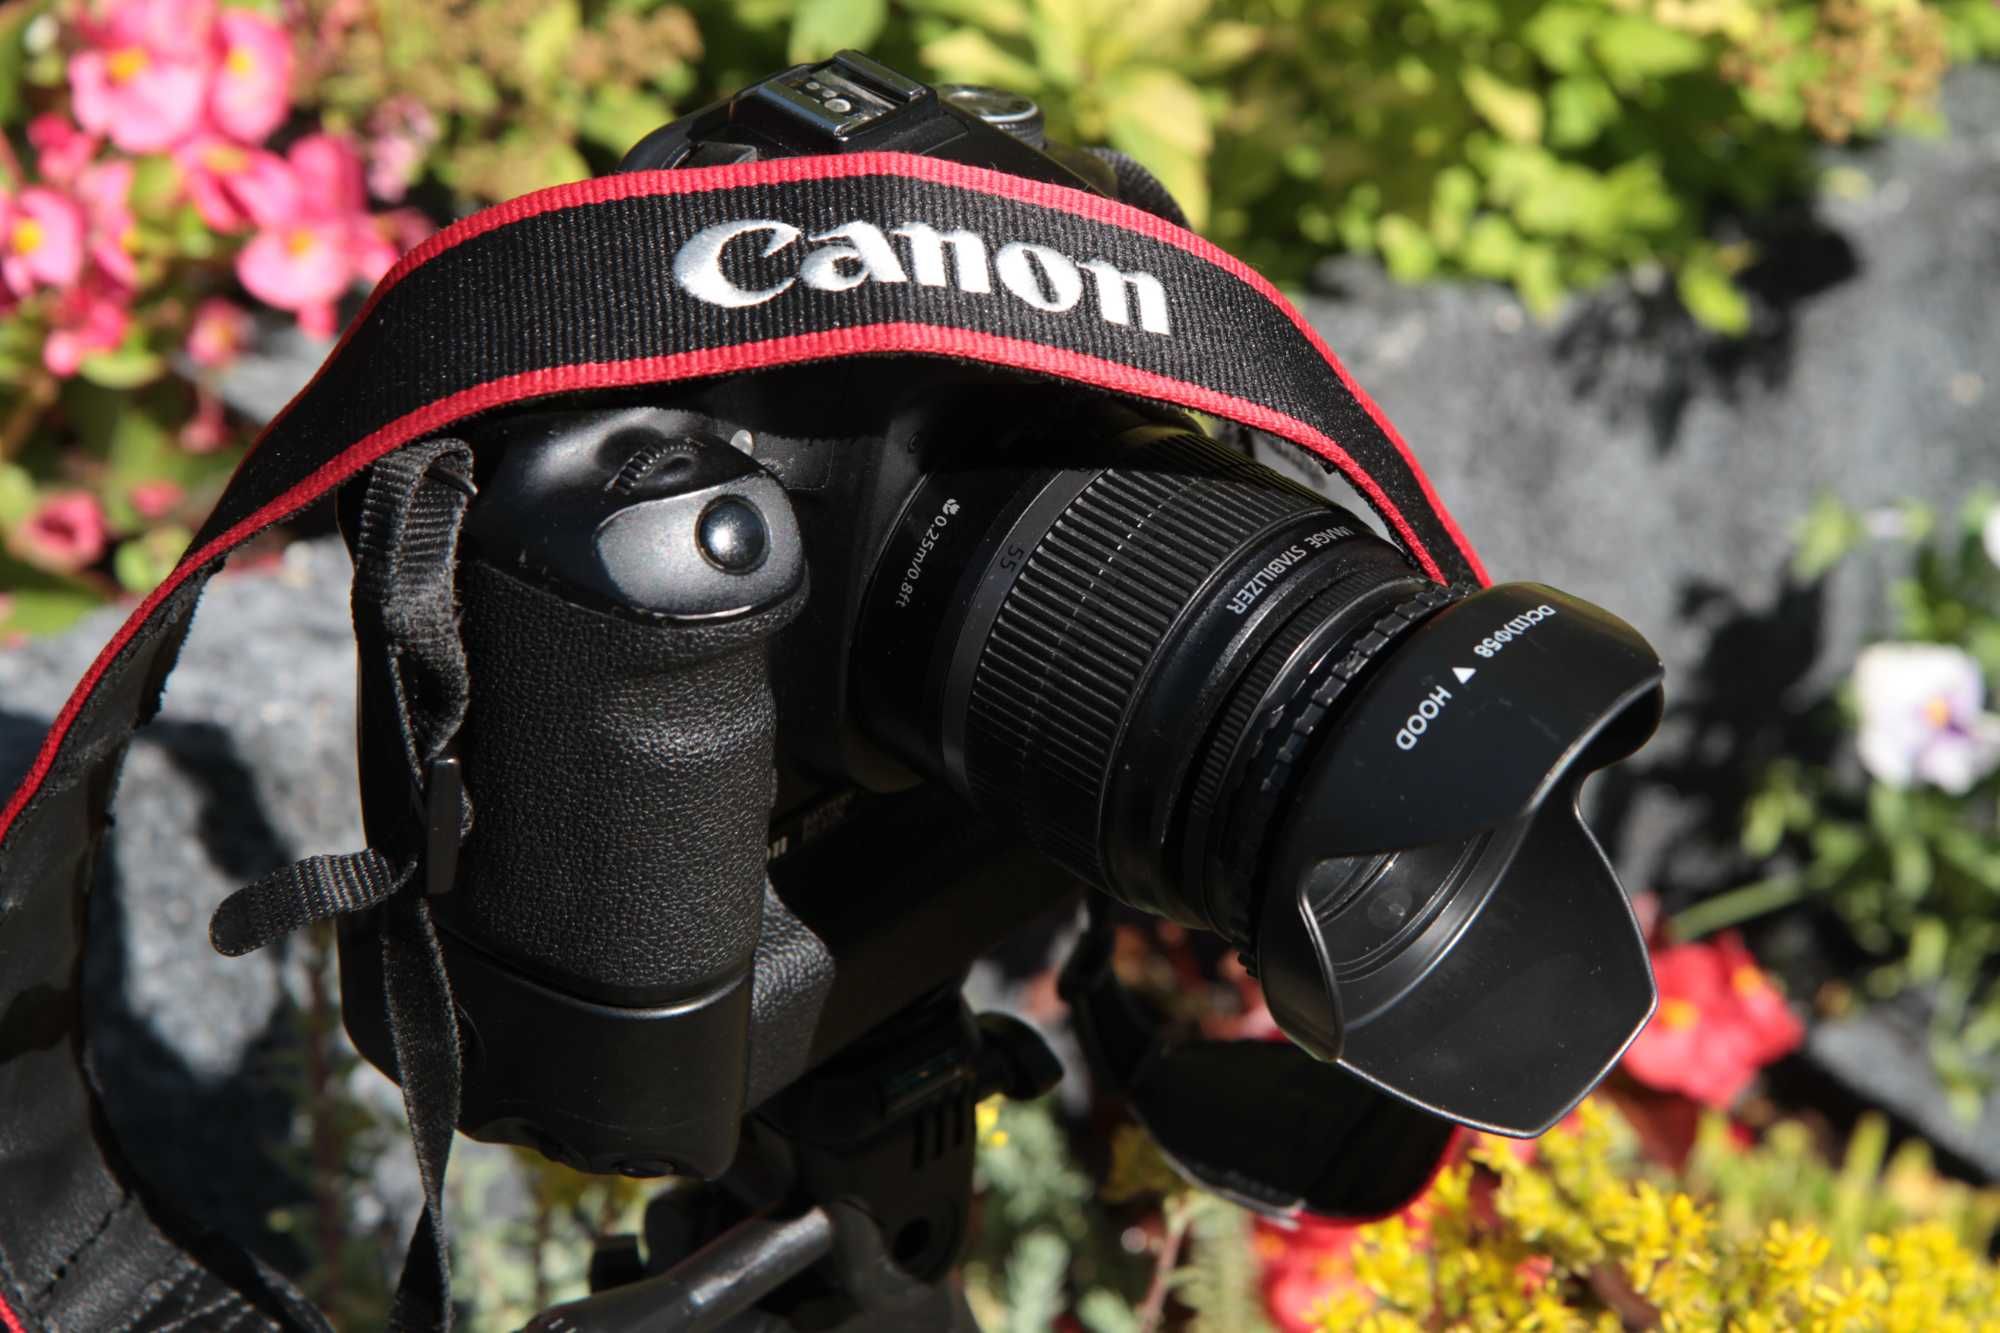 Aparat fotograficzny Canon eos 50D